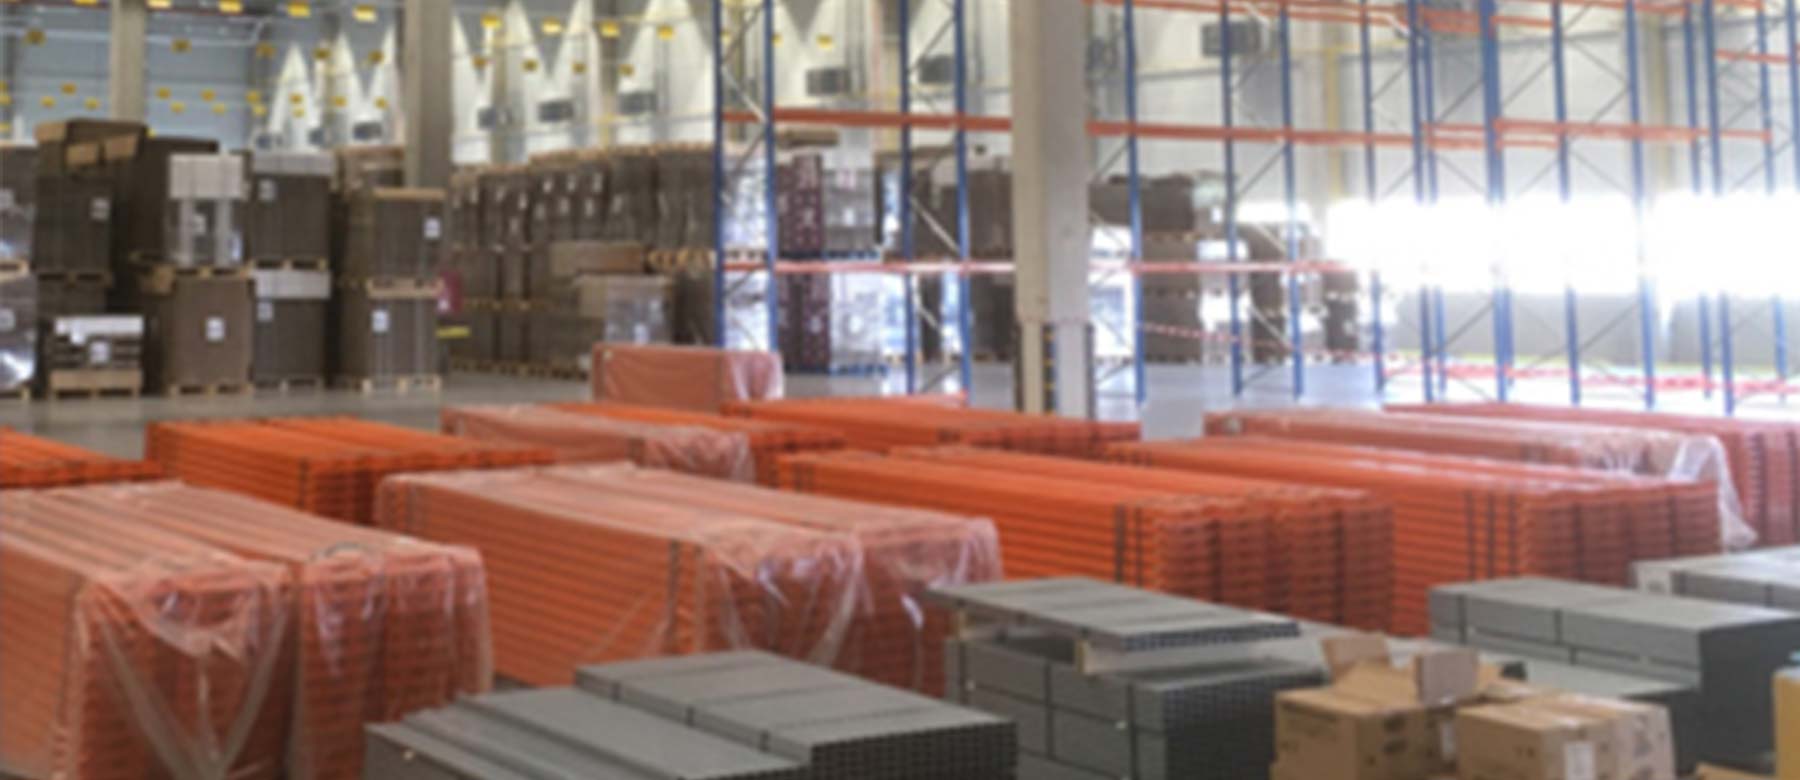 Warehouse automation and capacity increase